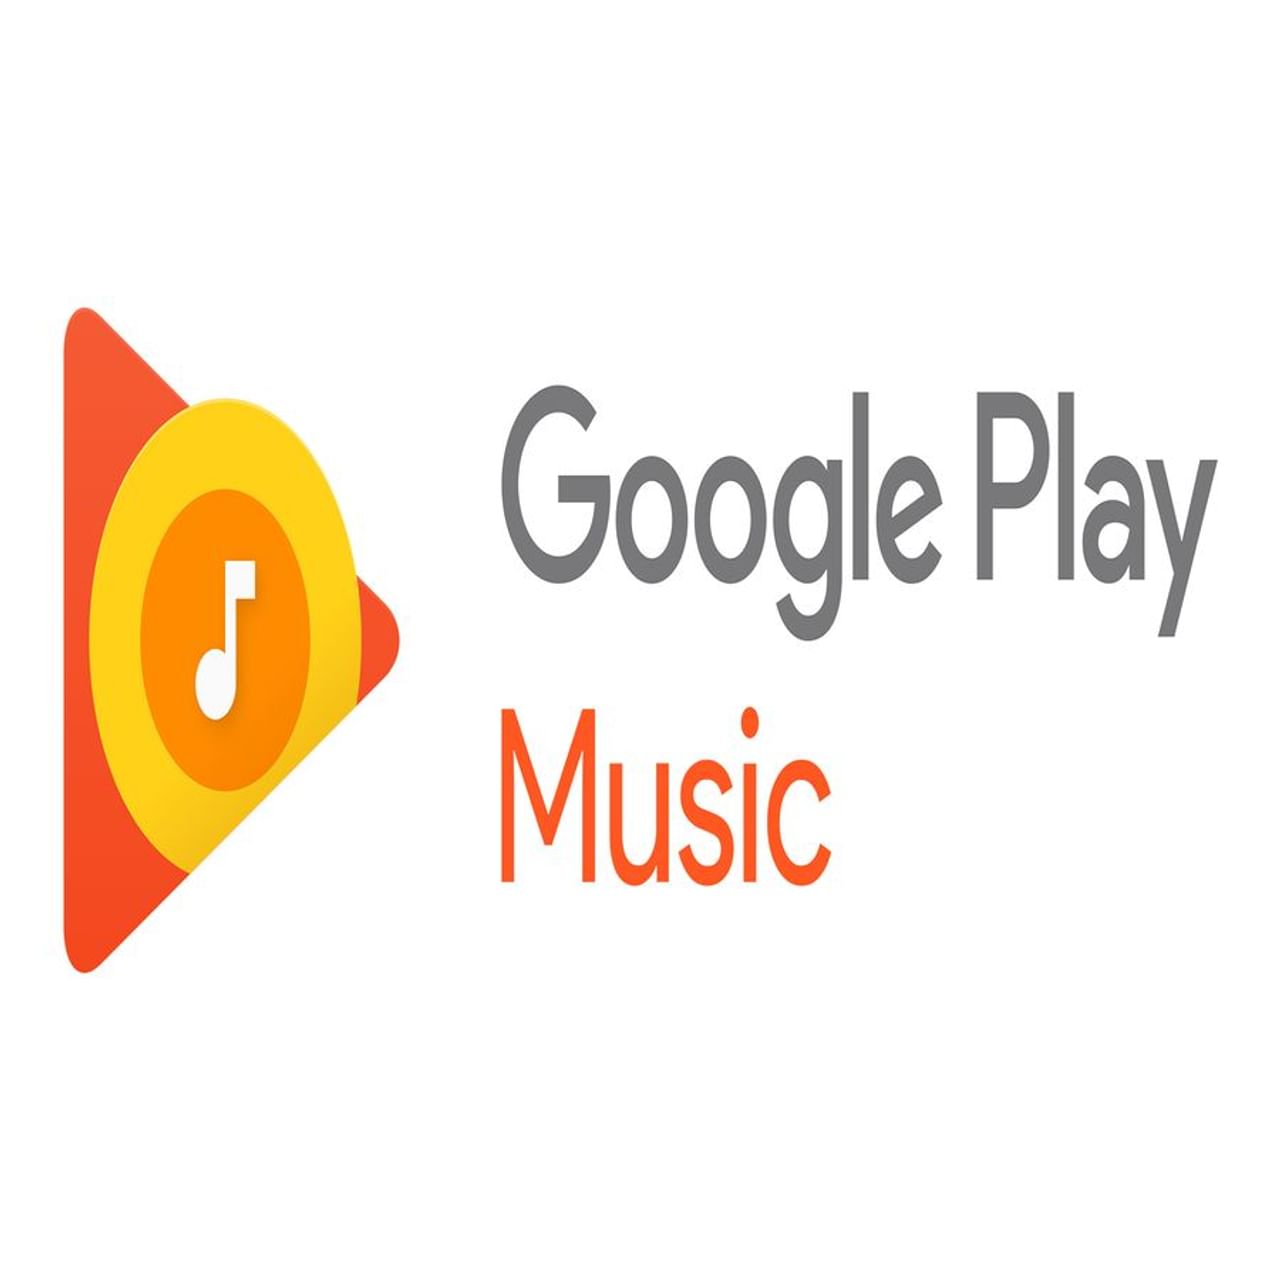 Google Play Music:  ફ્રી મ્યુઝિક એપ્લિકેશન Google Play Music થોડા વર્ષો પહેલા શરૂ થઈ હતી. તે યુઝર્સઓને મફતમાં તેમજ રૂ.99ના માસિક પ્રીમિયમ સબ્સ્ક્રિીપ્શન બંનેમાં મ્યુઝિક સાંભળવાની સ્વતંત્રતા આપે છે. તેમાં લગભગ 35 મિલિયન ગીતો ઉપલબ્ધ છે. તે બીજા નંબરે બેસ્ટ ફ્રી મ્યુઝિક એપ છે.